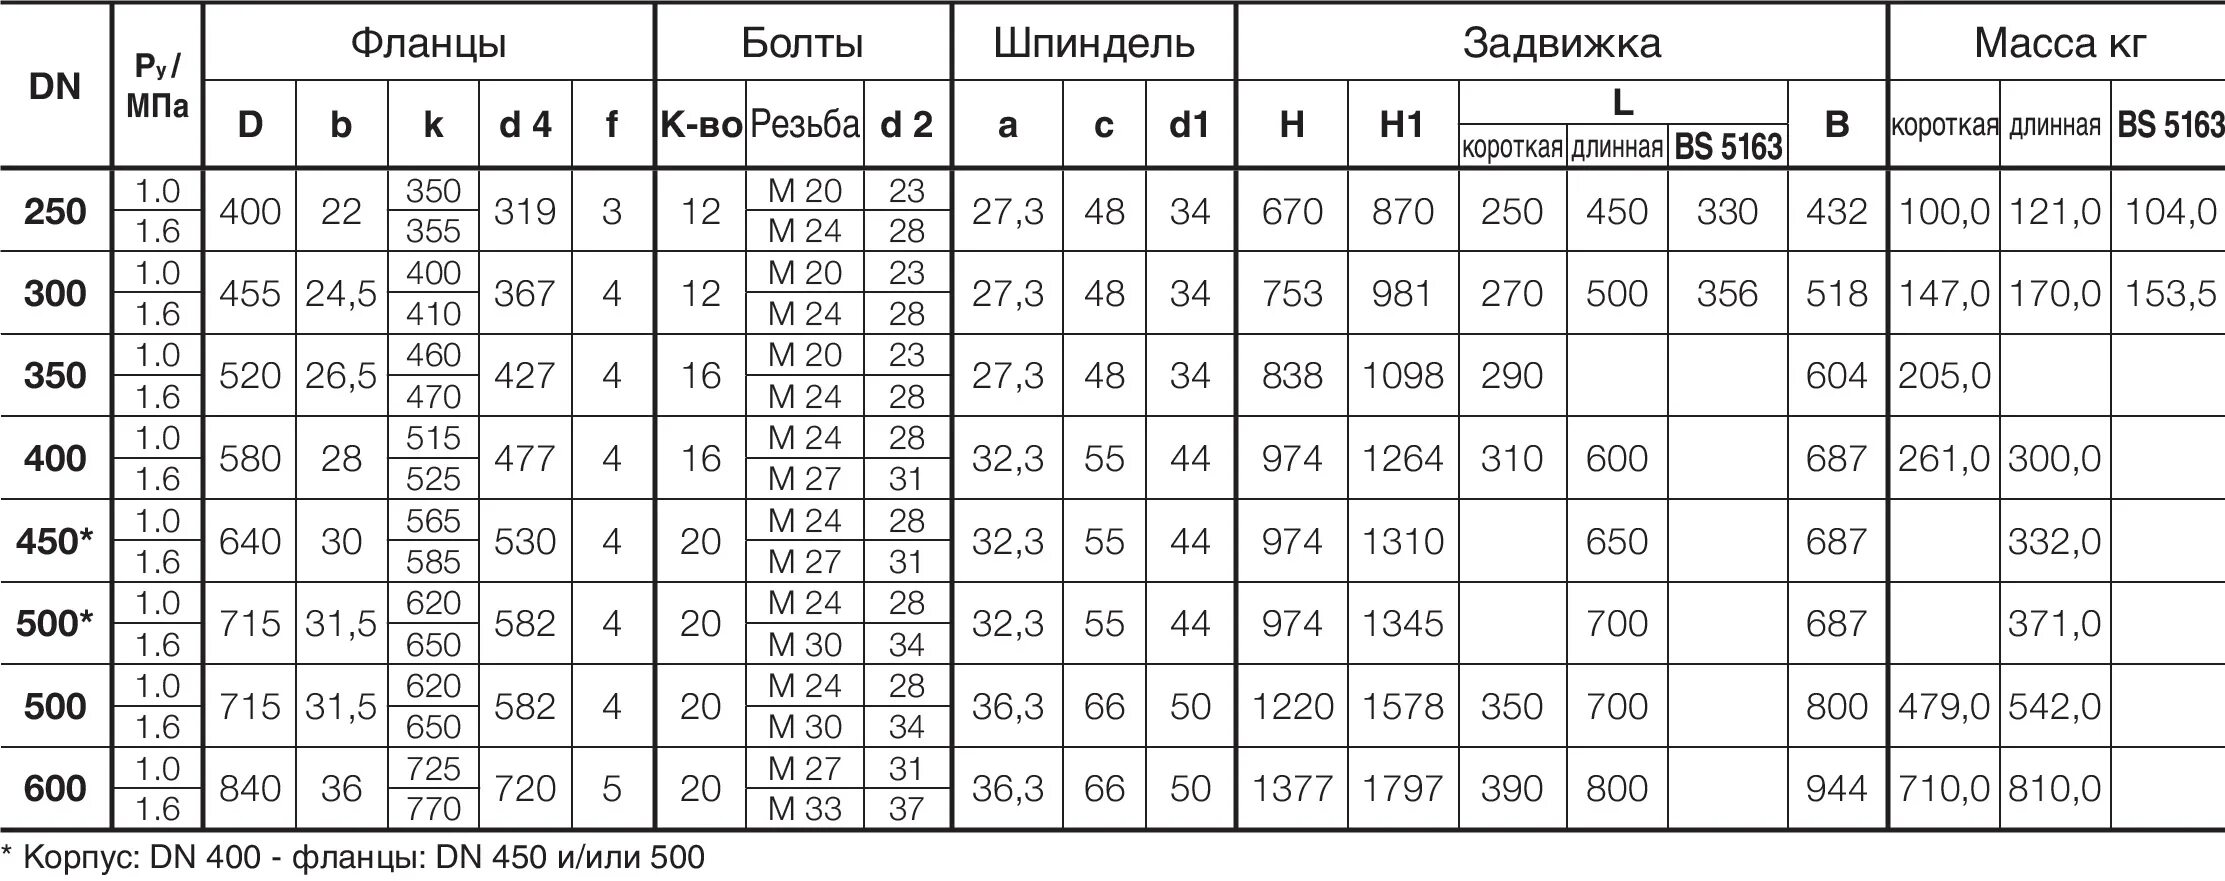 Фланцевые соединения таблица. Задвижка фланцевая 100-250 вес. Задвижка 400/16 вес. Задвижка 300 вес. Задвижка чугунная ду600 вес задвижки.